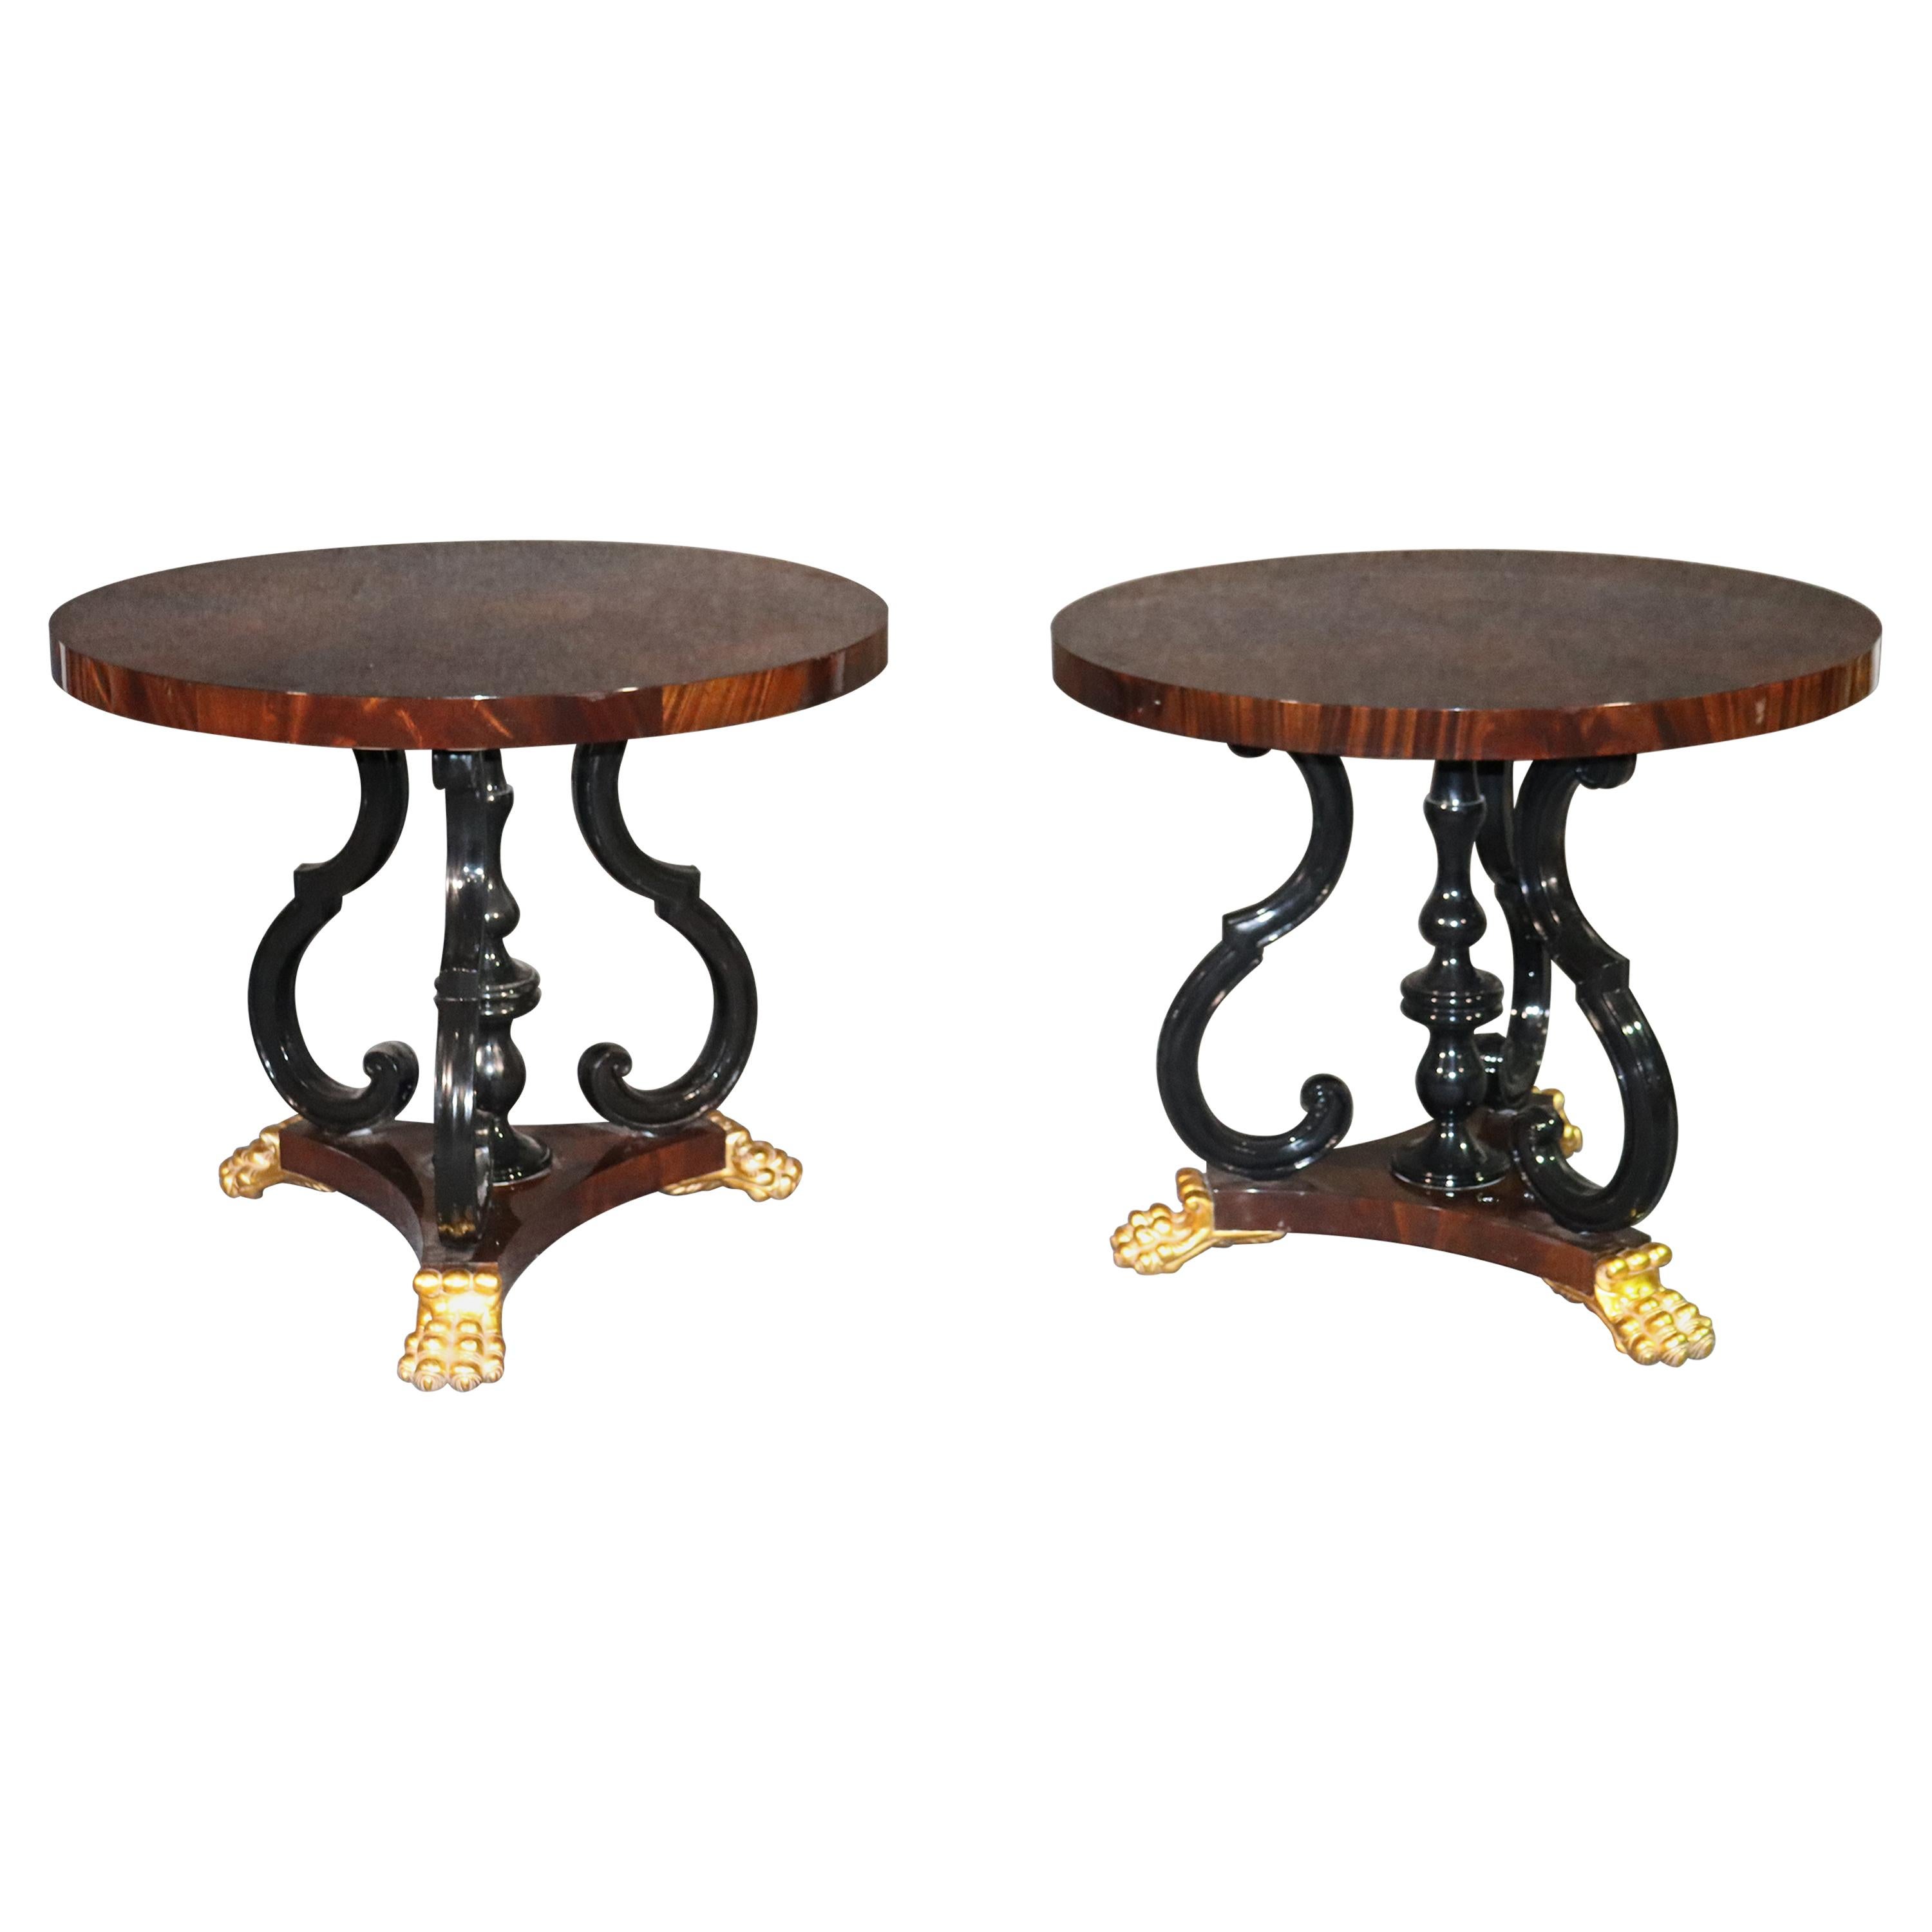 Pair of Ebonized & Gilded English Regency Style Flame Mahogany Round End Tables